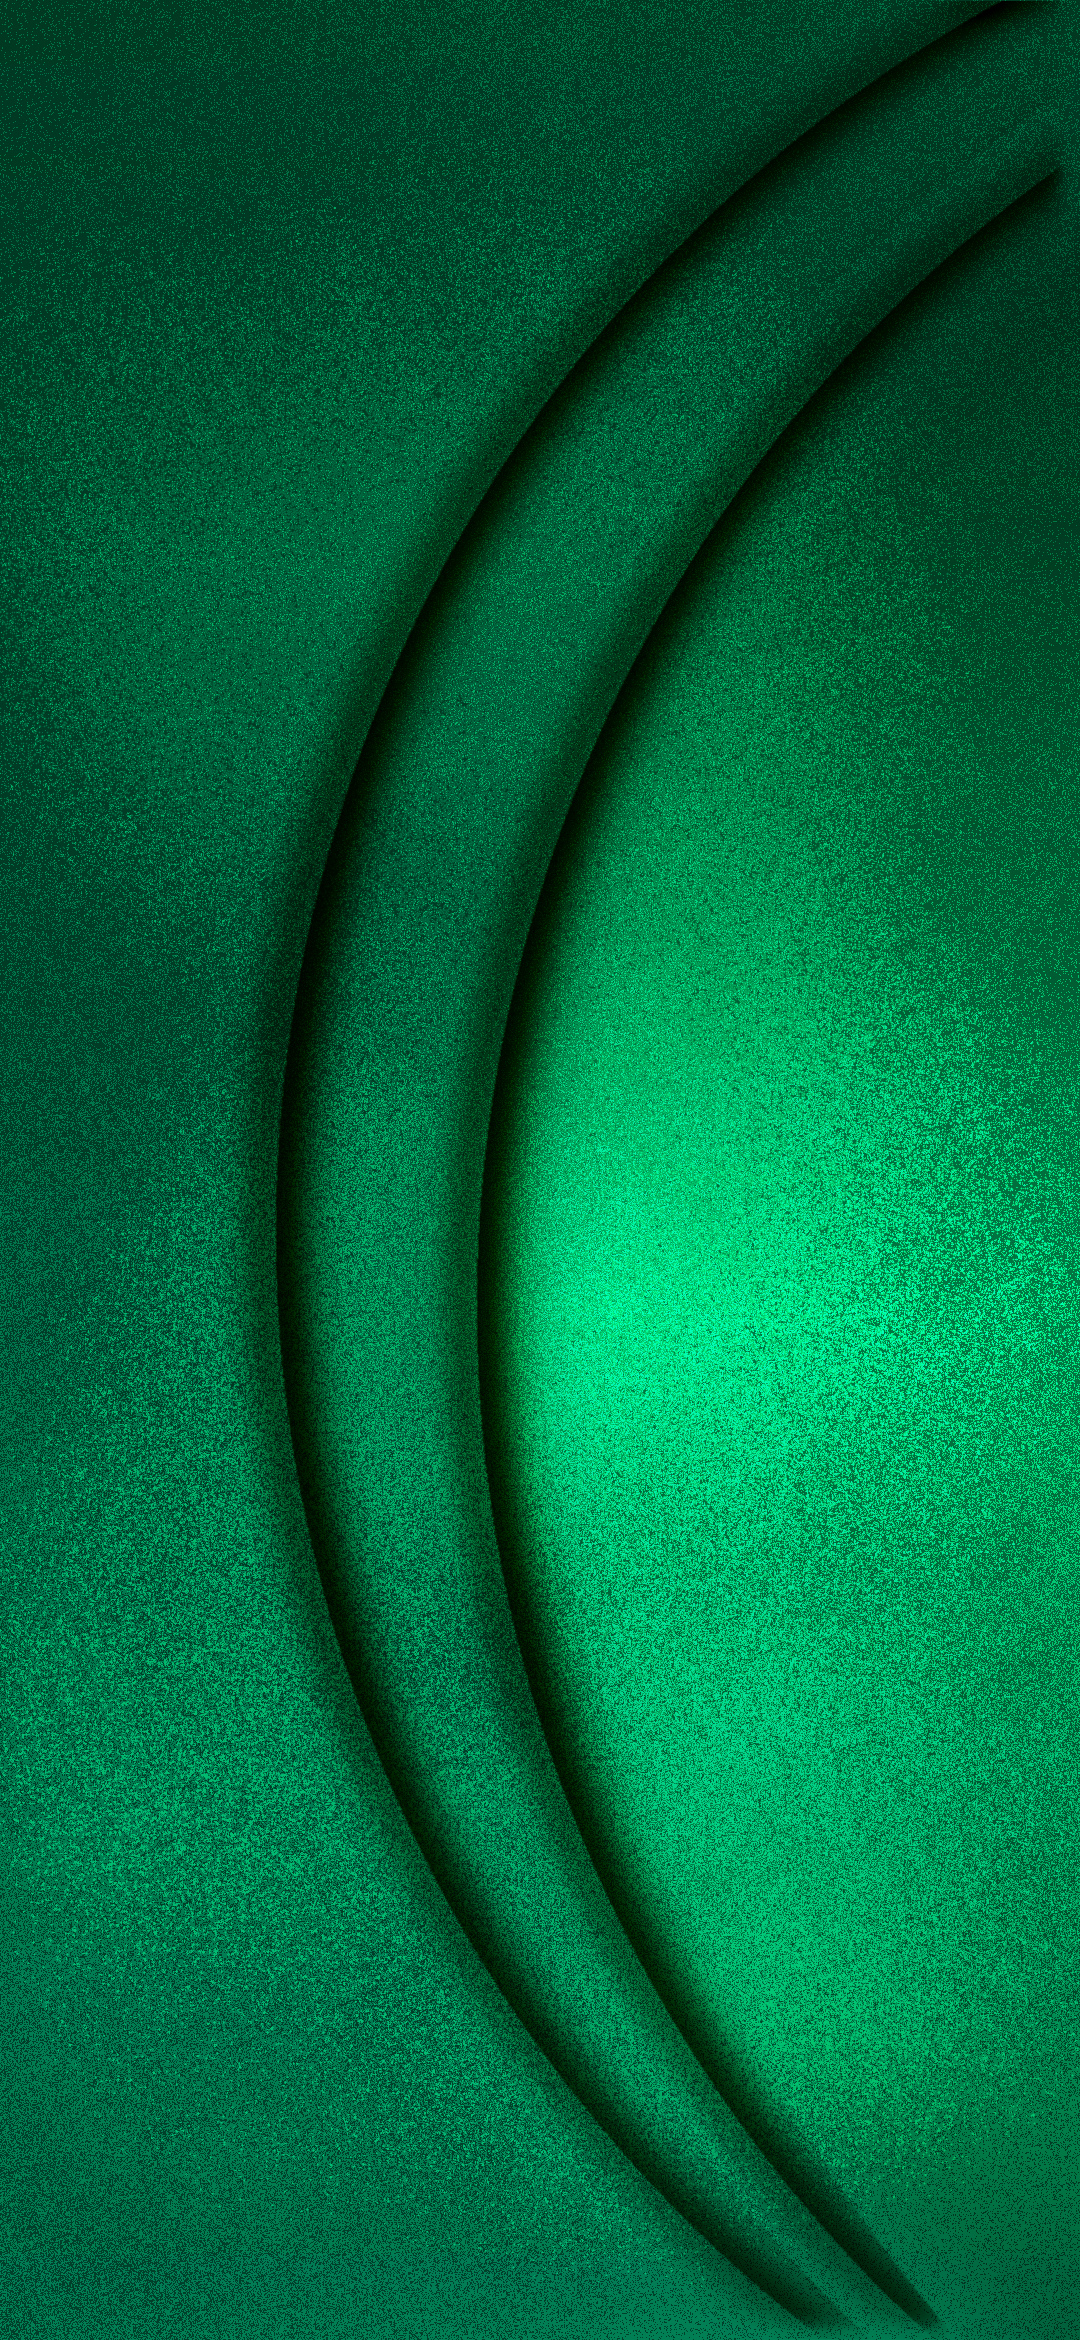 HD wallpaper green emerald gradation blur backgrounds full frame  green color  Wallpaper Flare